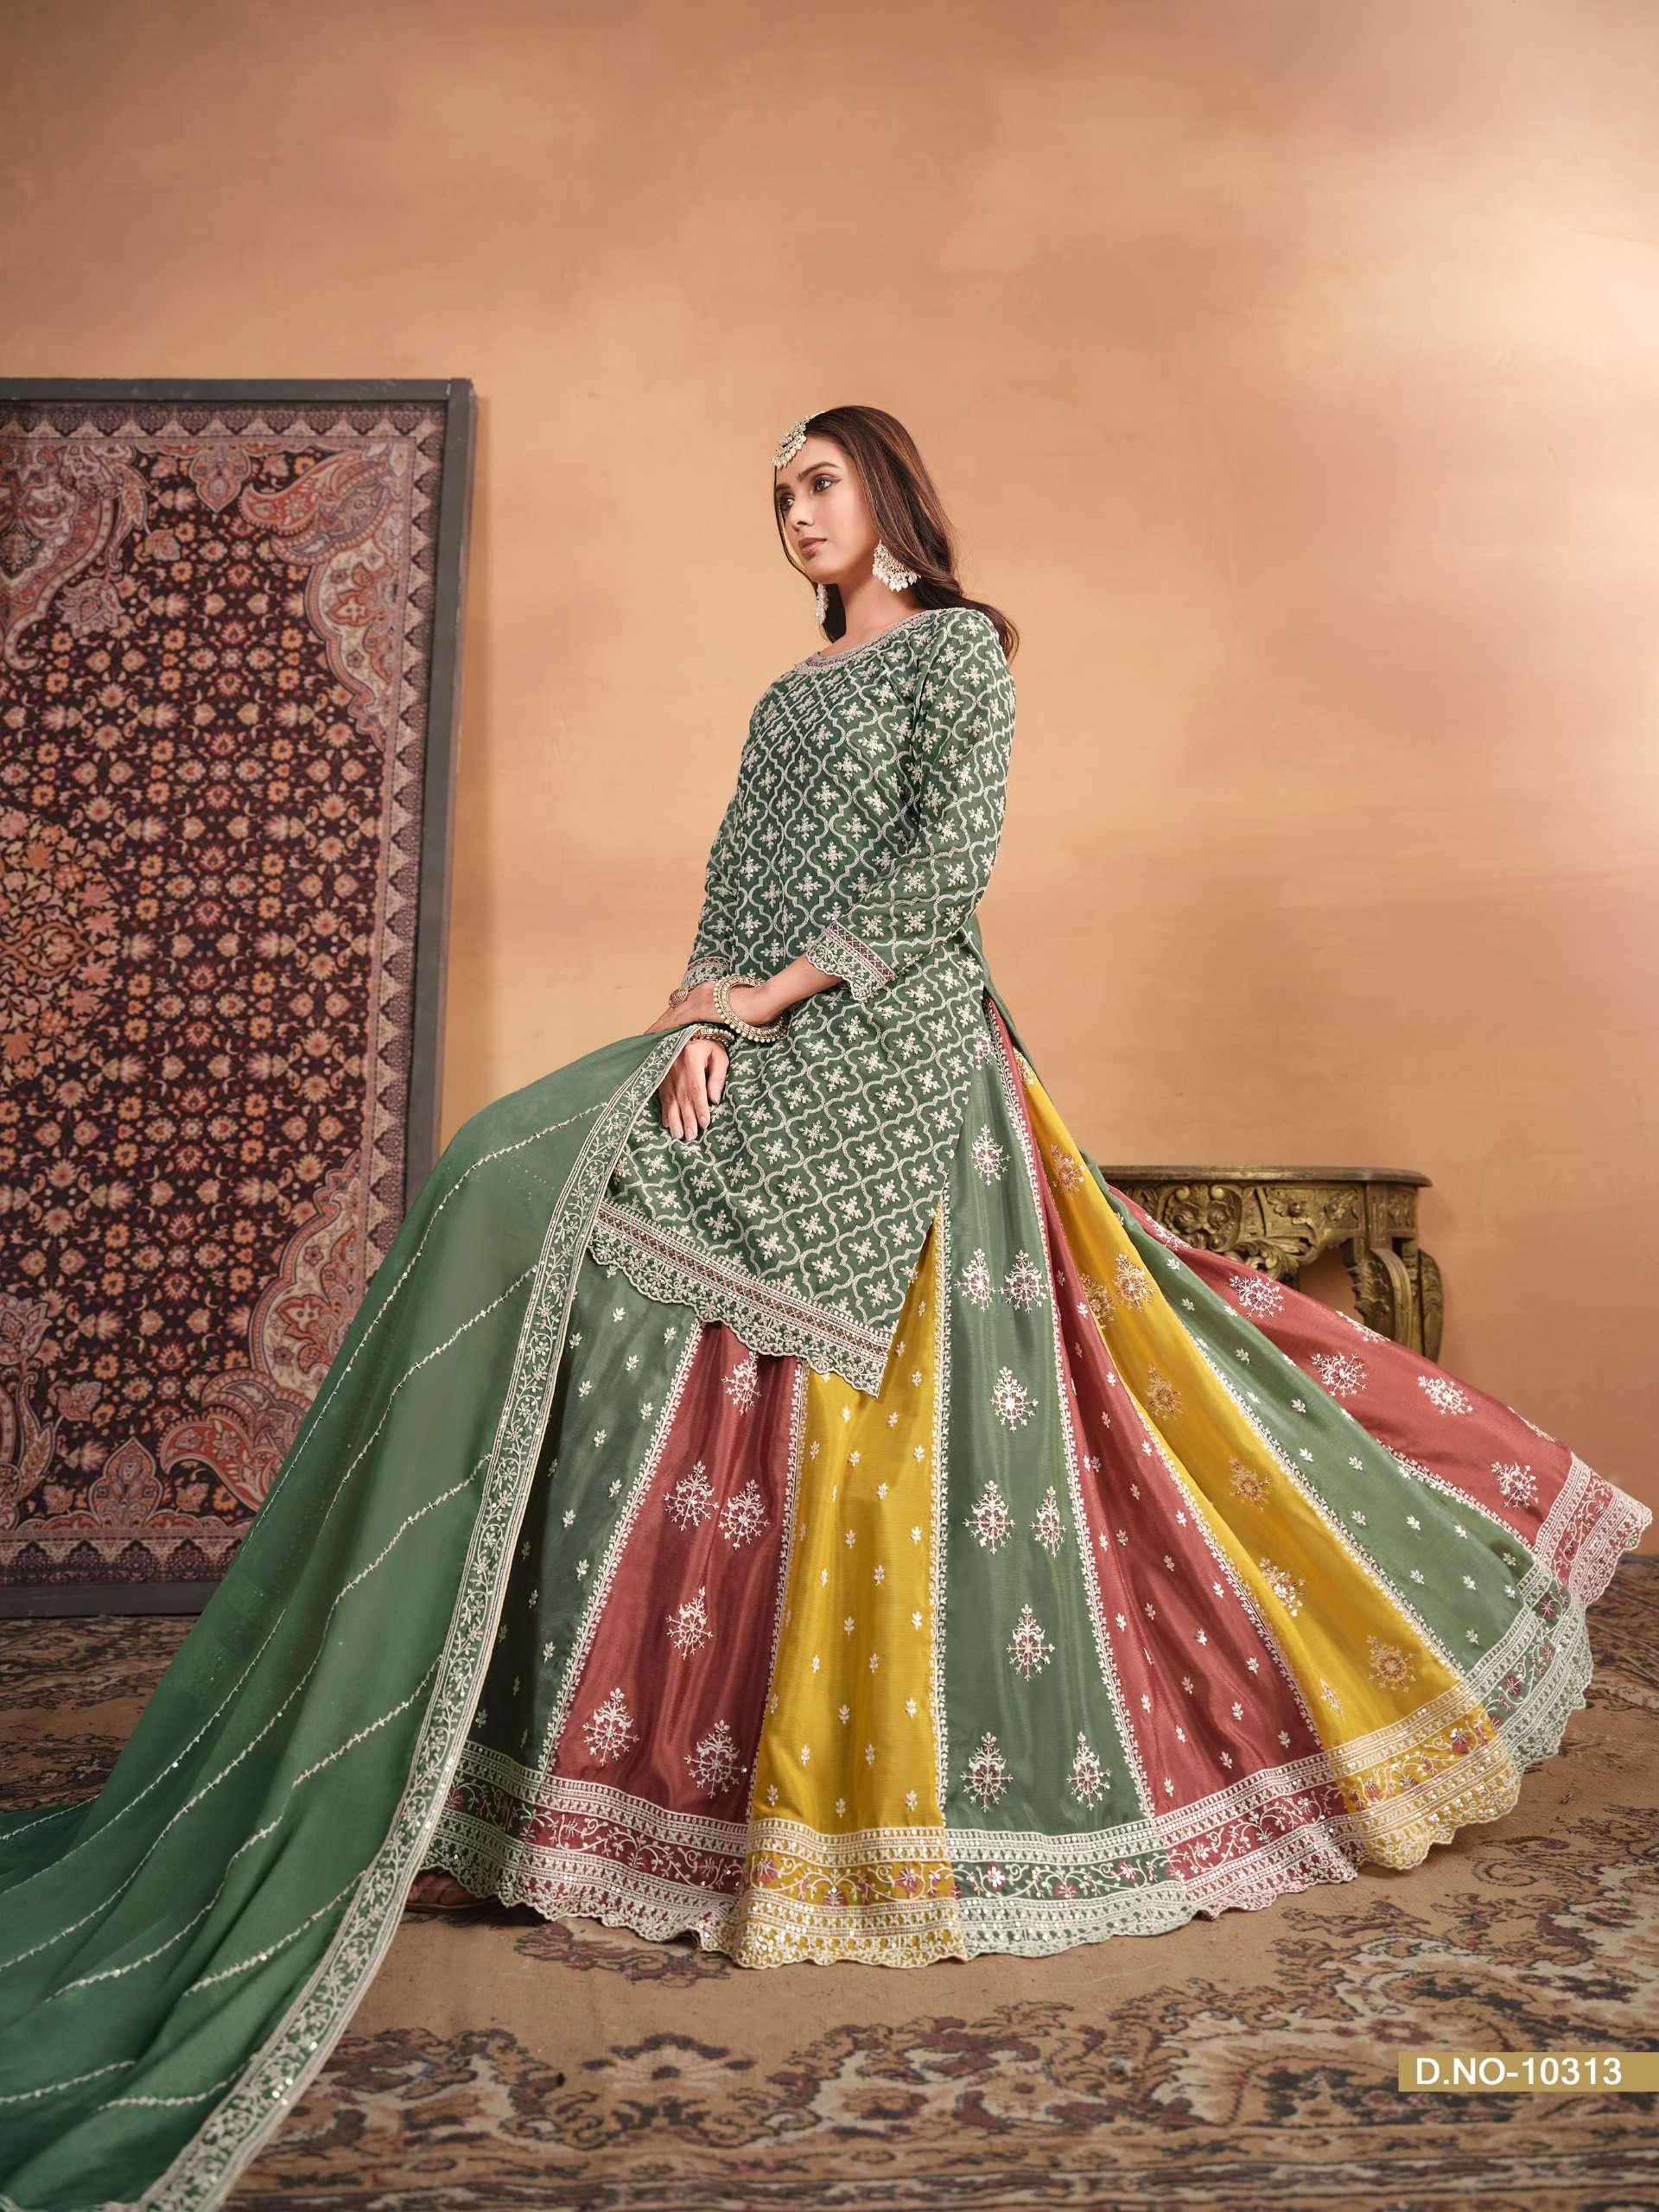 Anjubaa Vol 31 10311 To 10313 Designer Lehenga Style Dress Wedding Collection